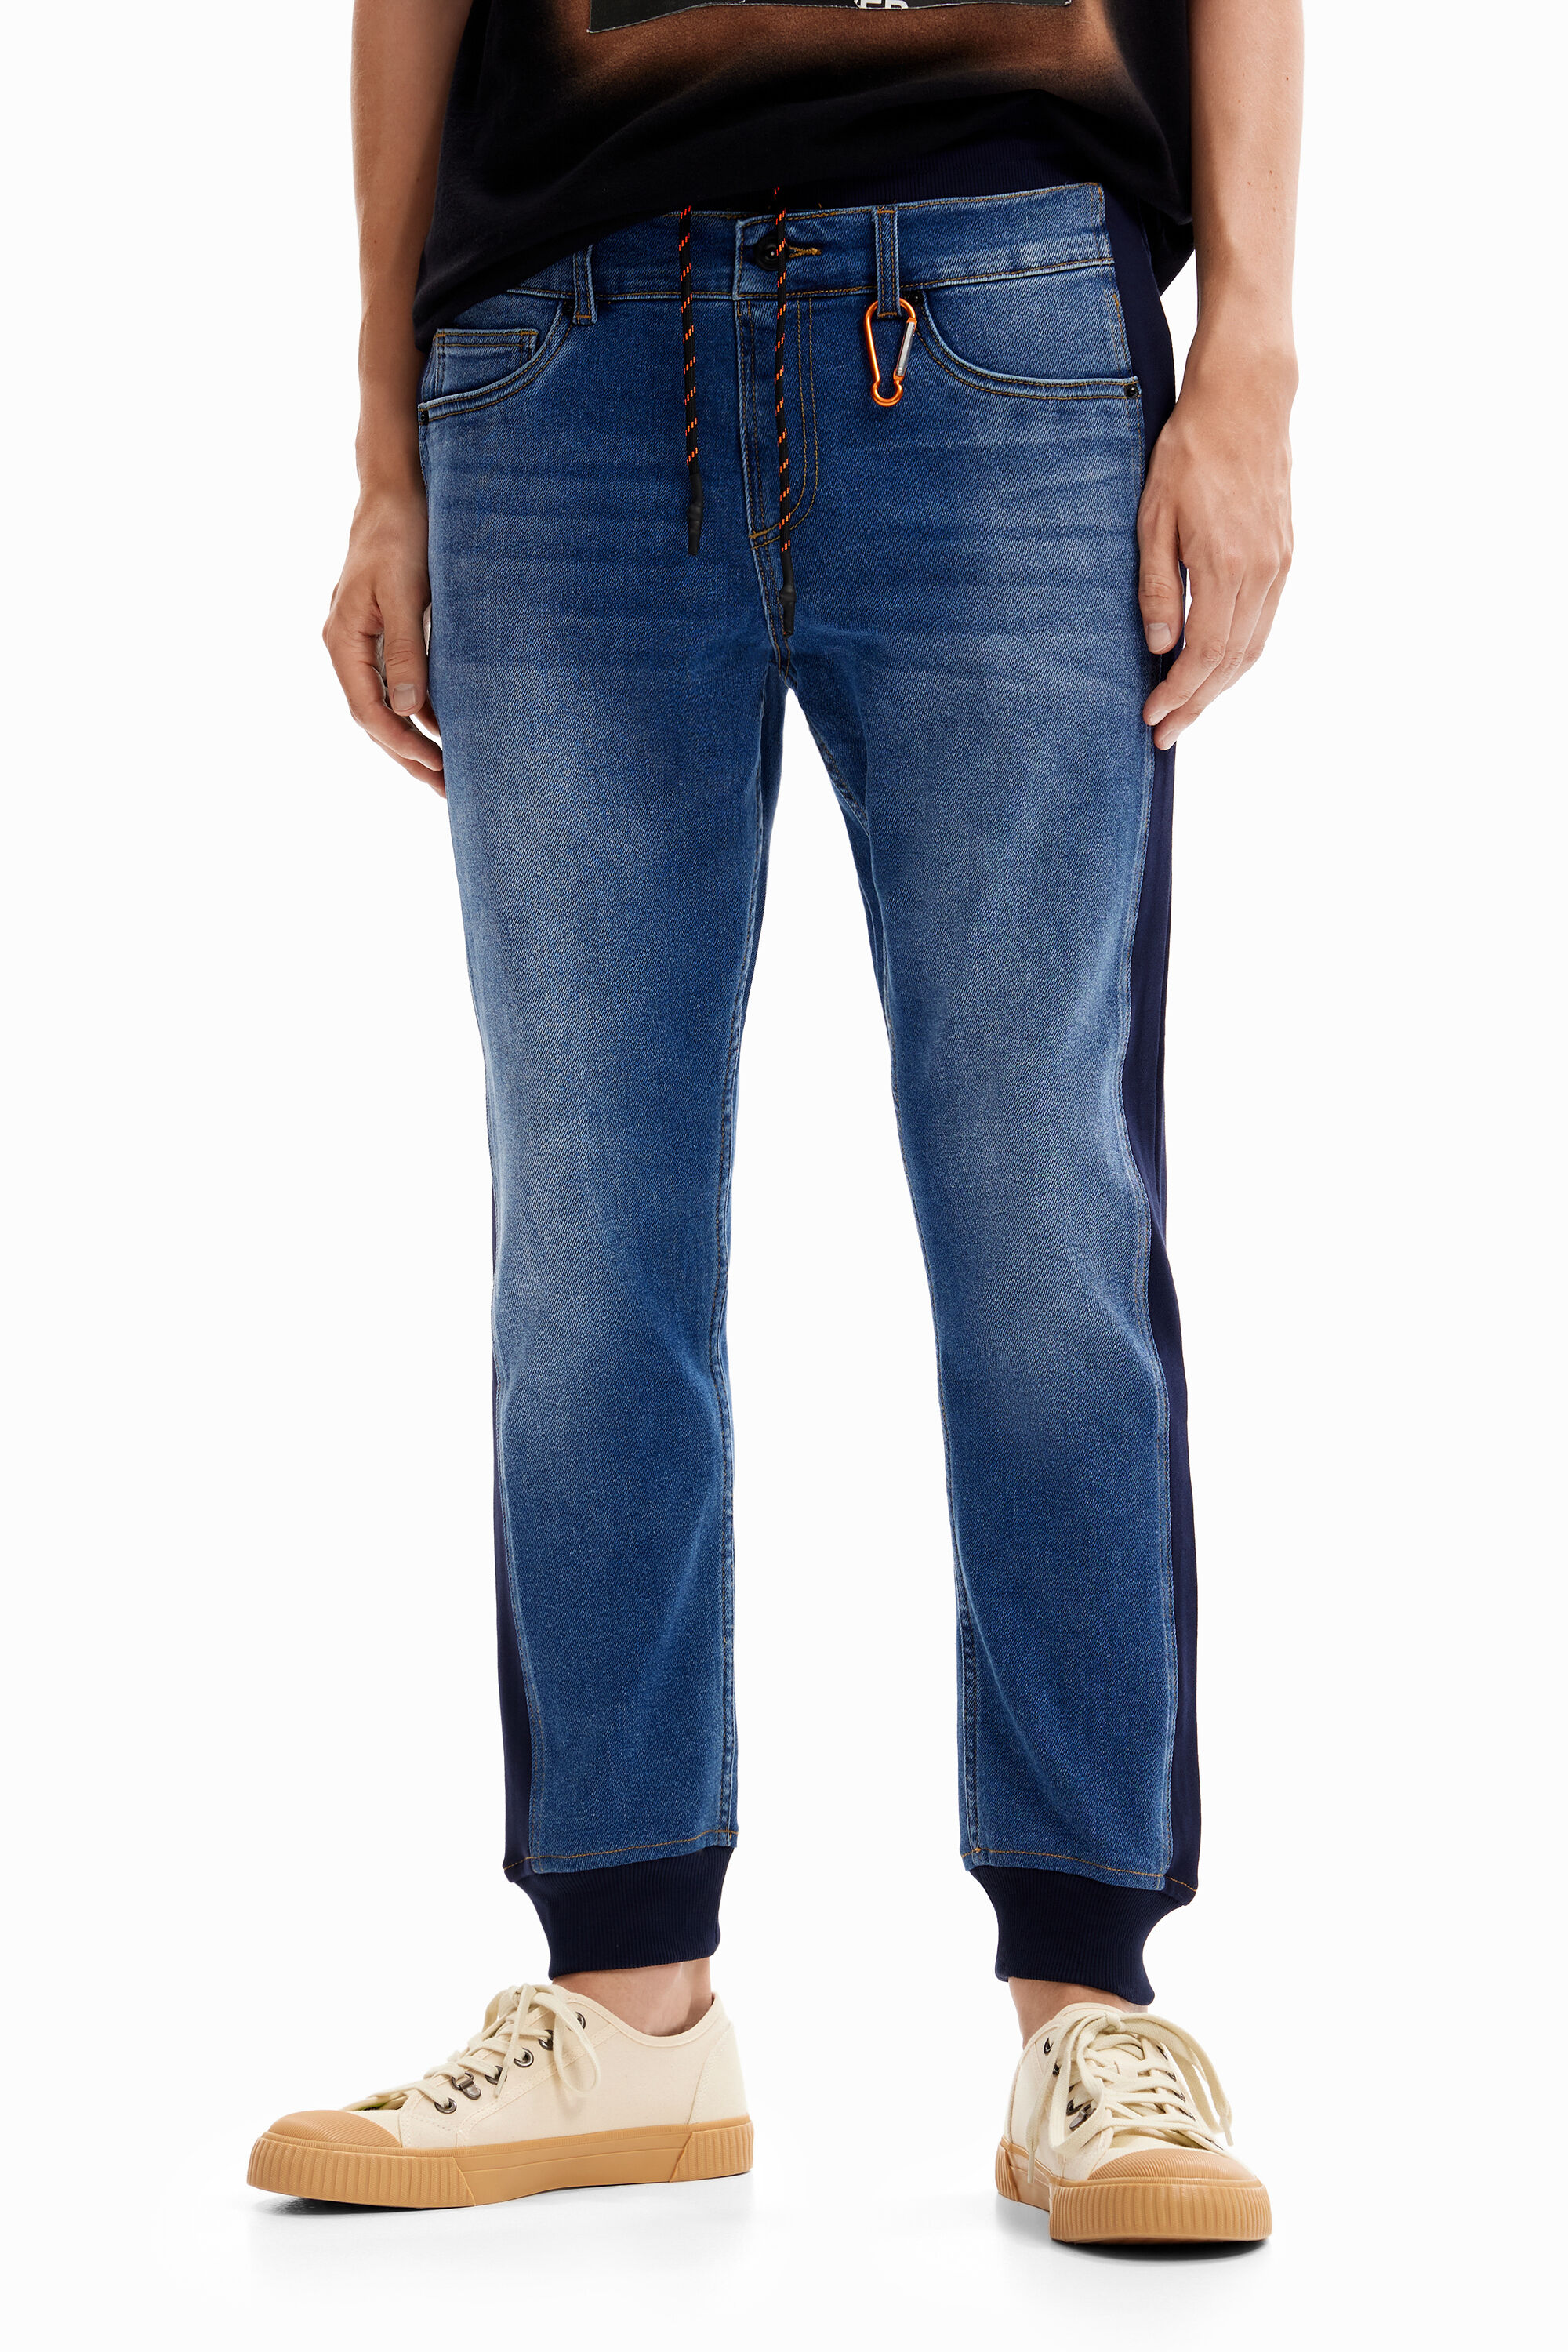 Desigual Men`s Jeans DENIM BUDAPEST REP regular fit Blue  NEW  RP 109 Eur